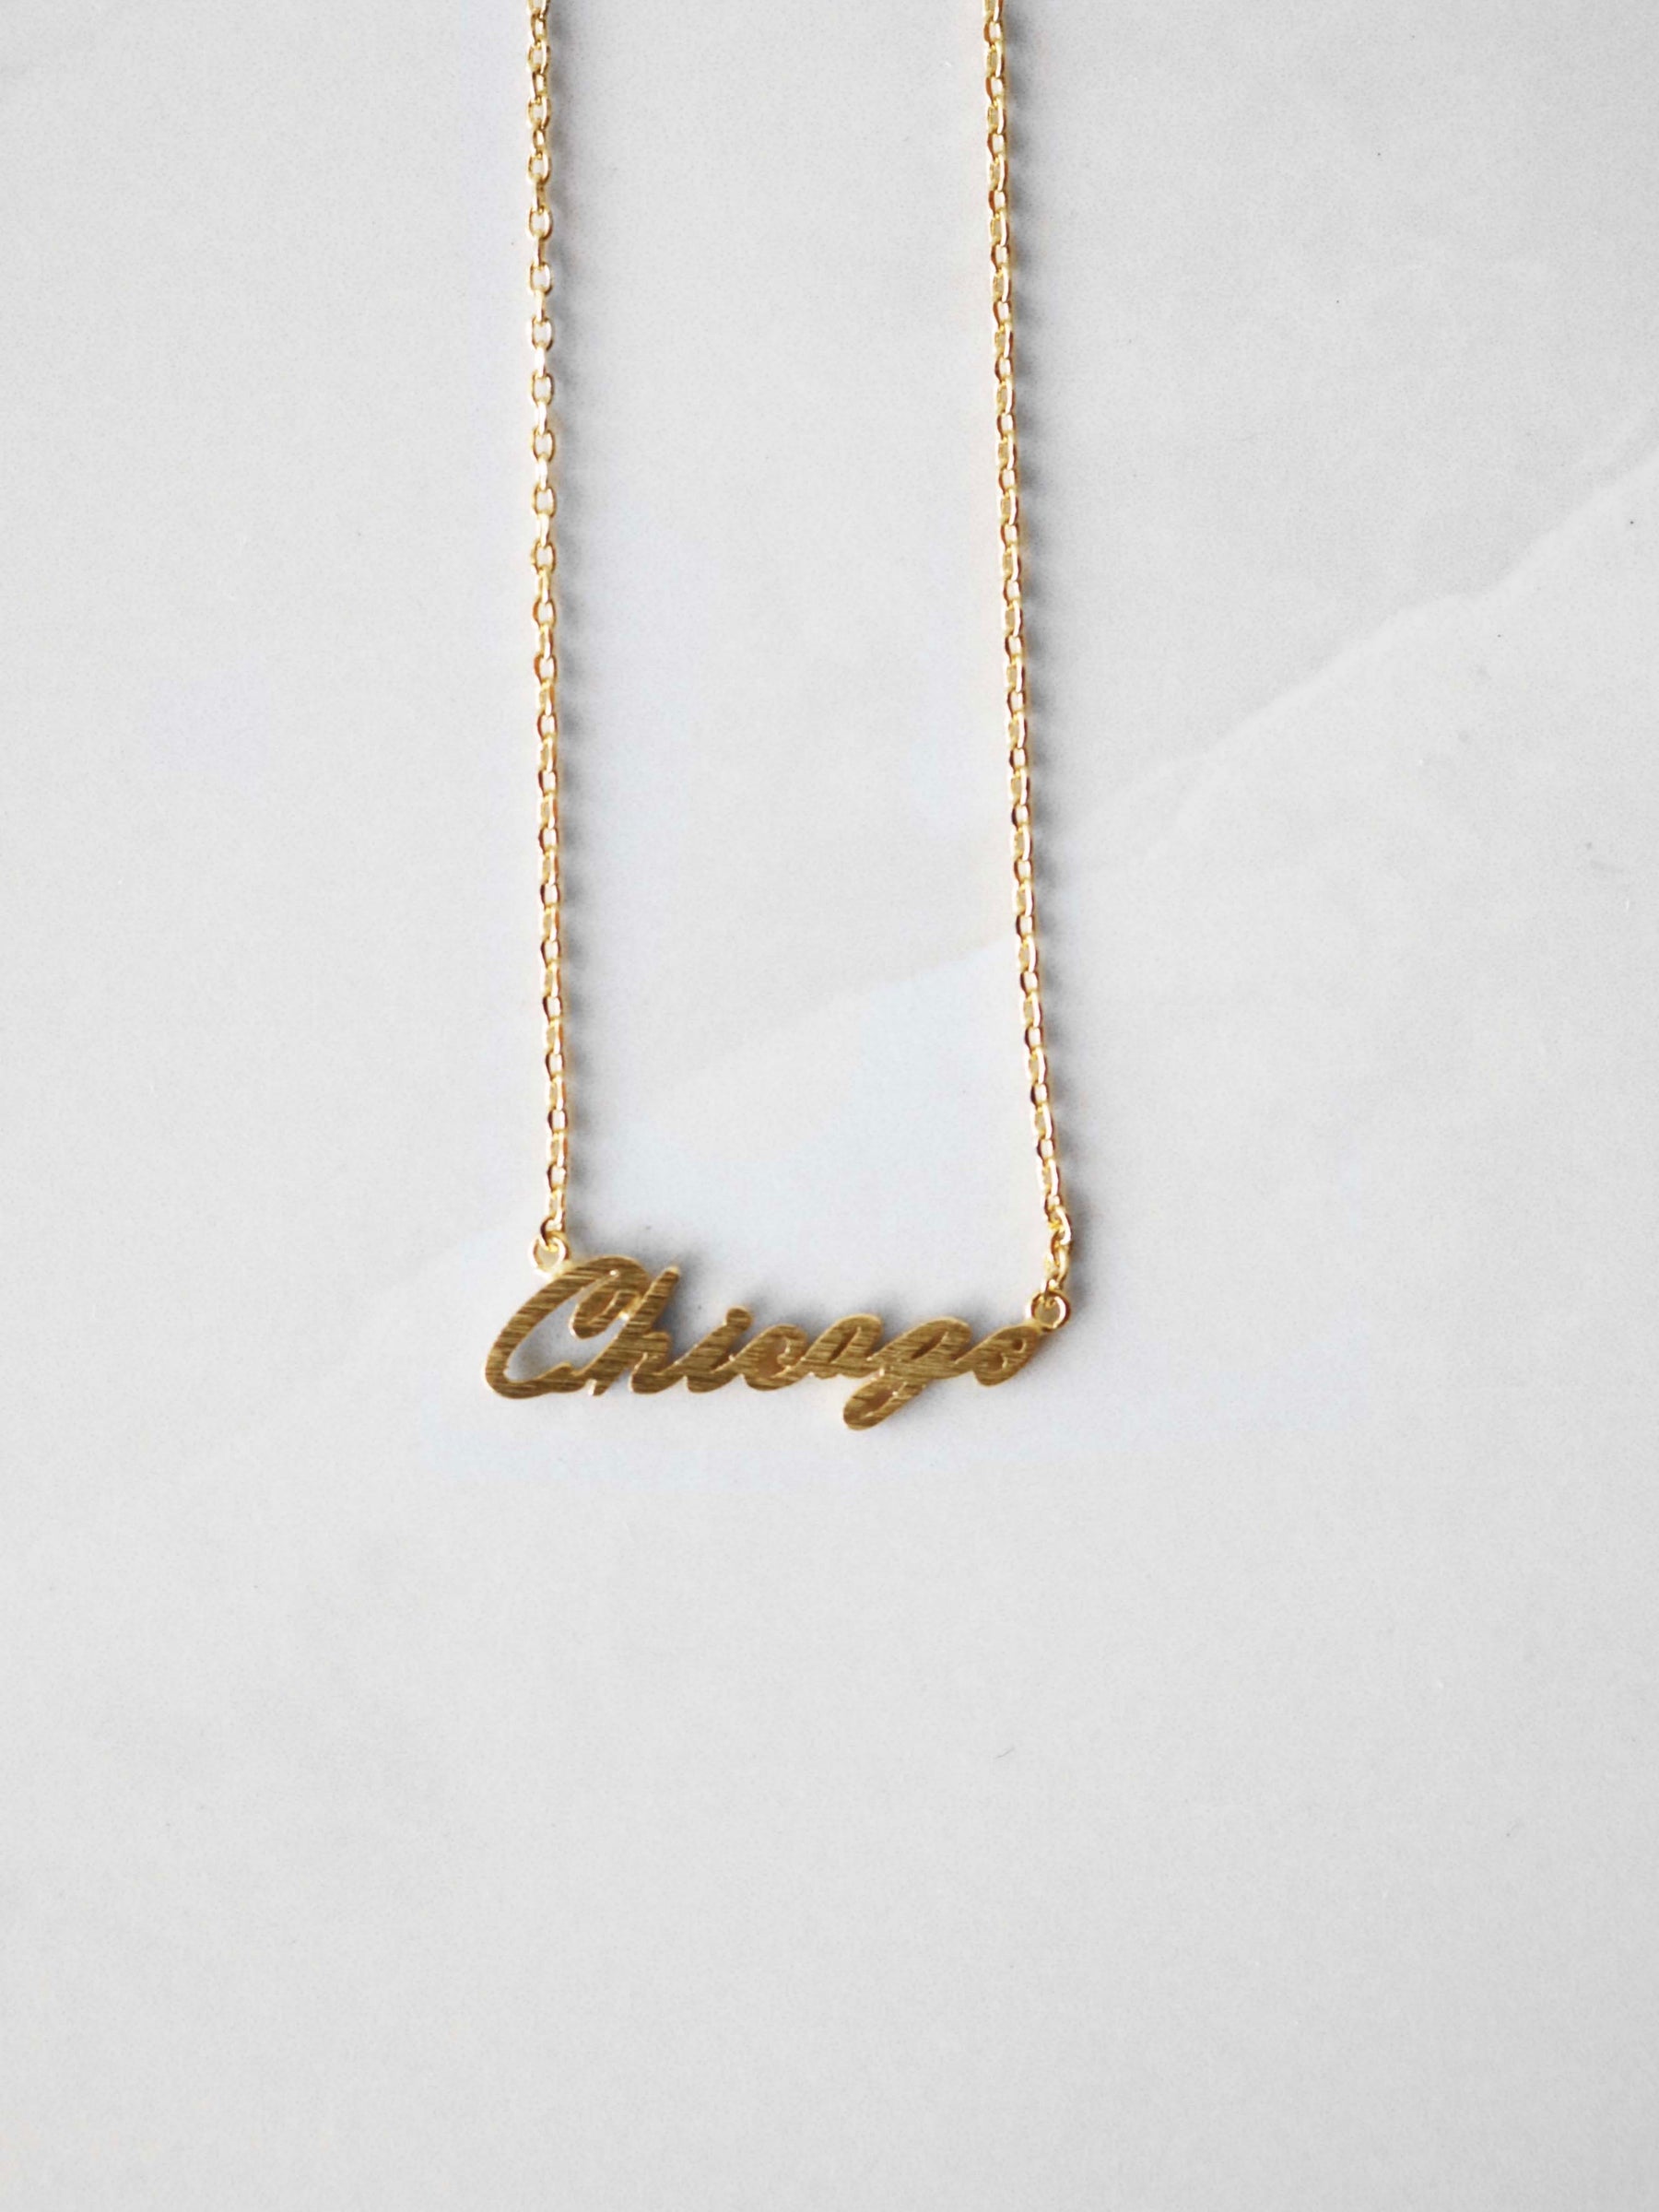 Chicago Script Necklace